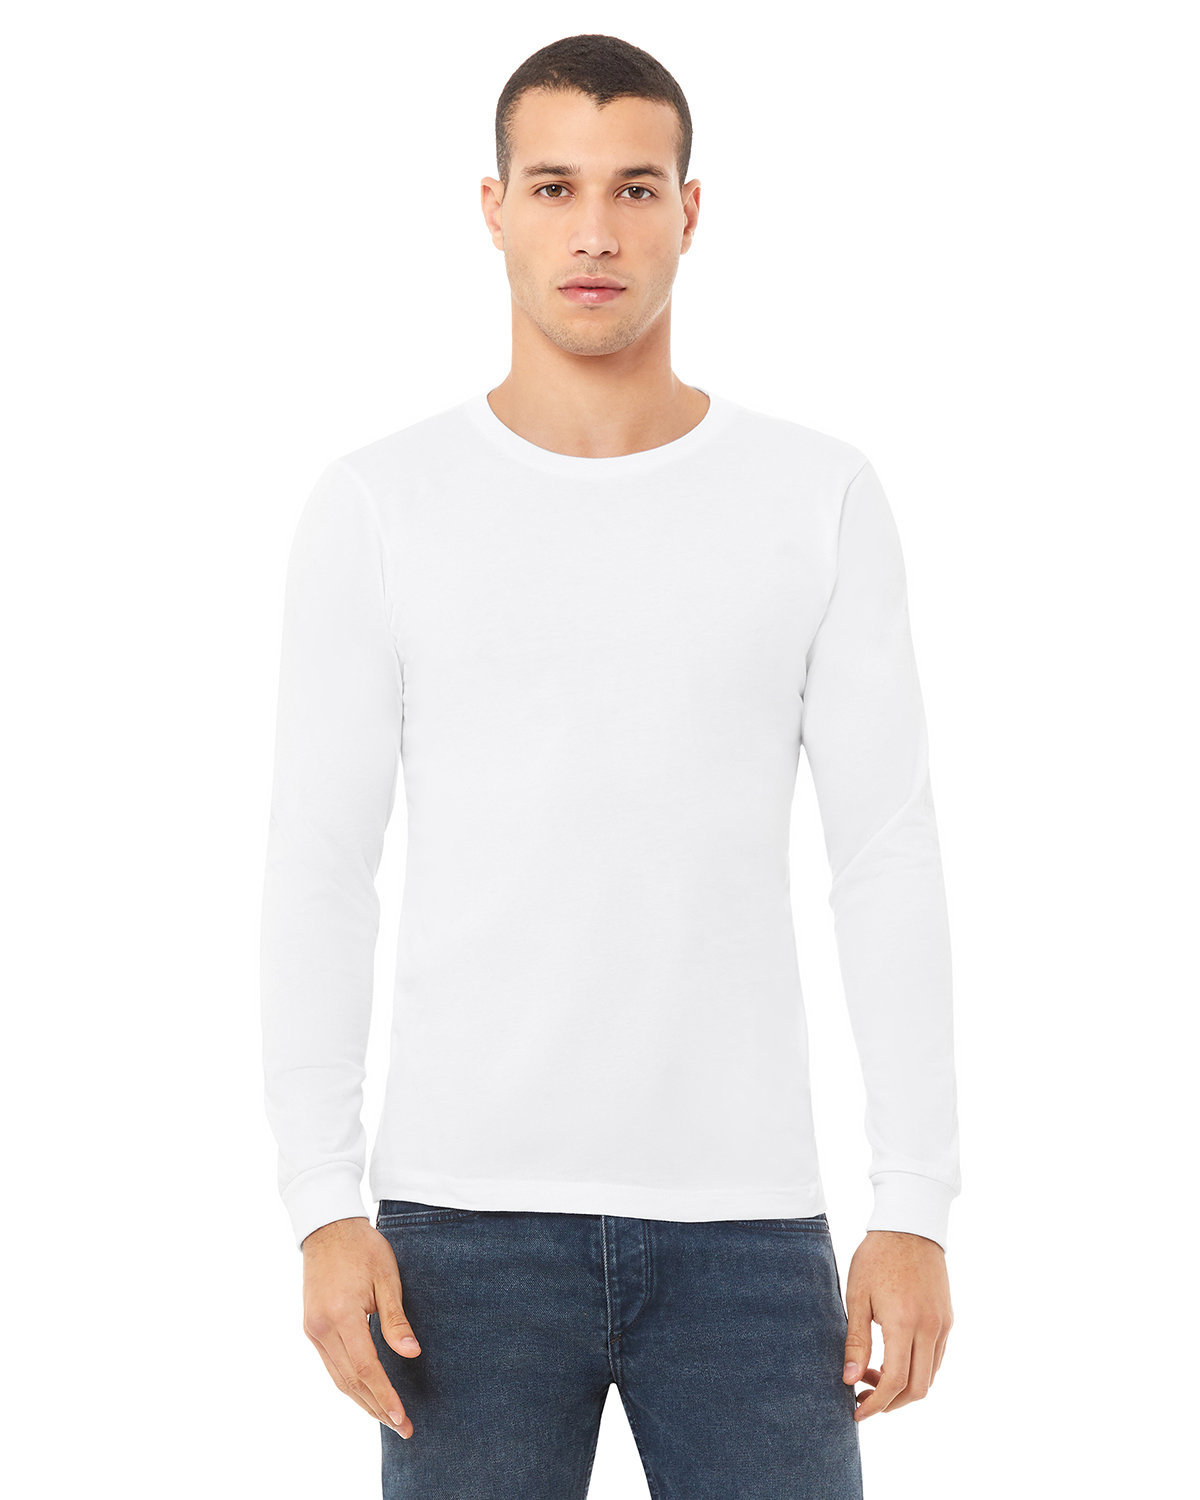 Bella + Canvas Unisex Jersey Long-Sleeve T-Shirt WHITE 